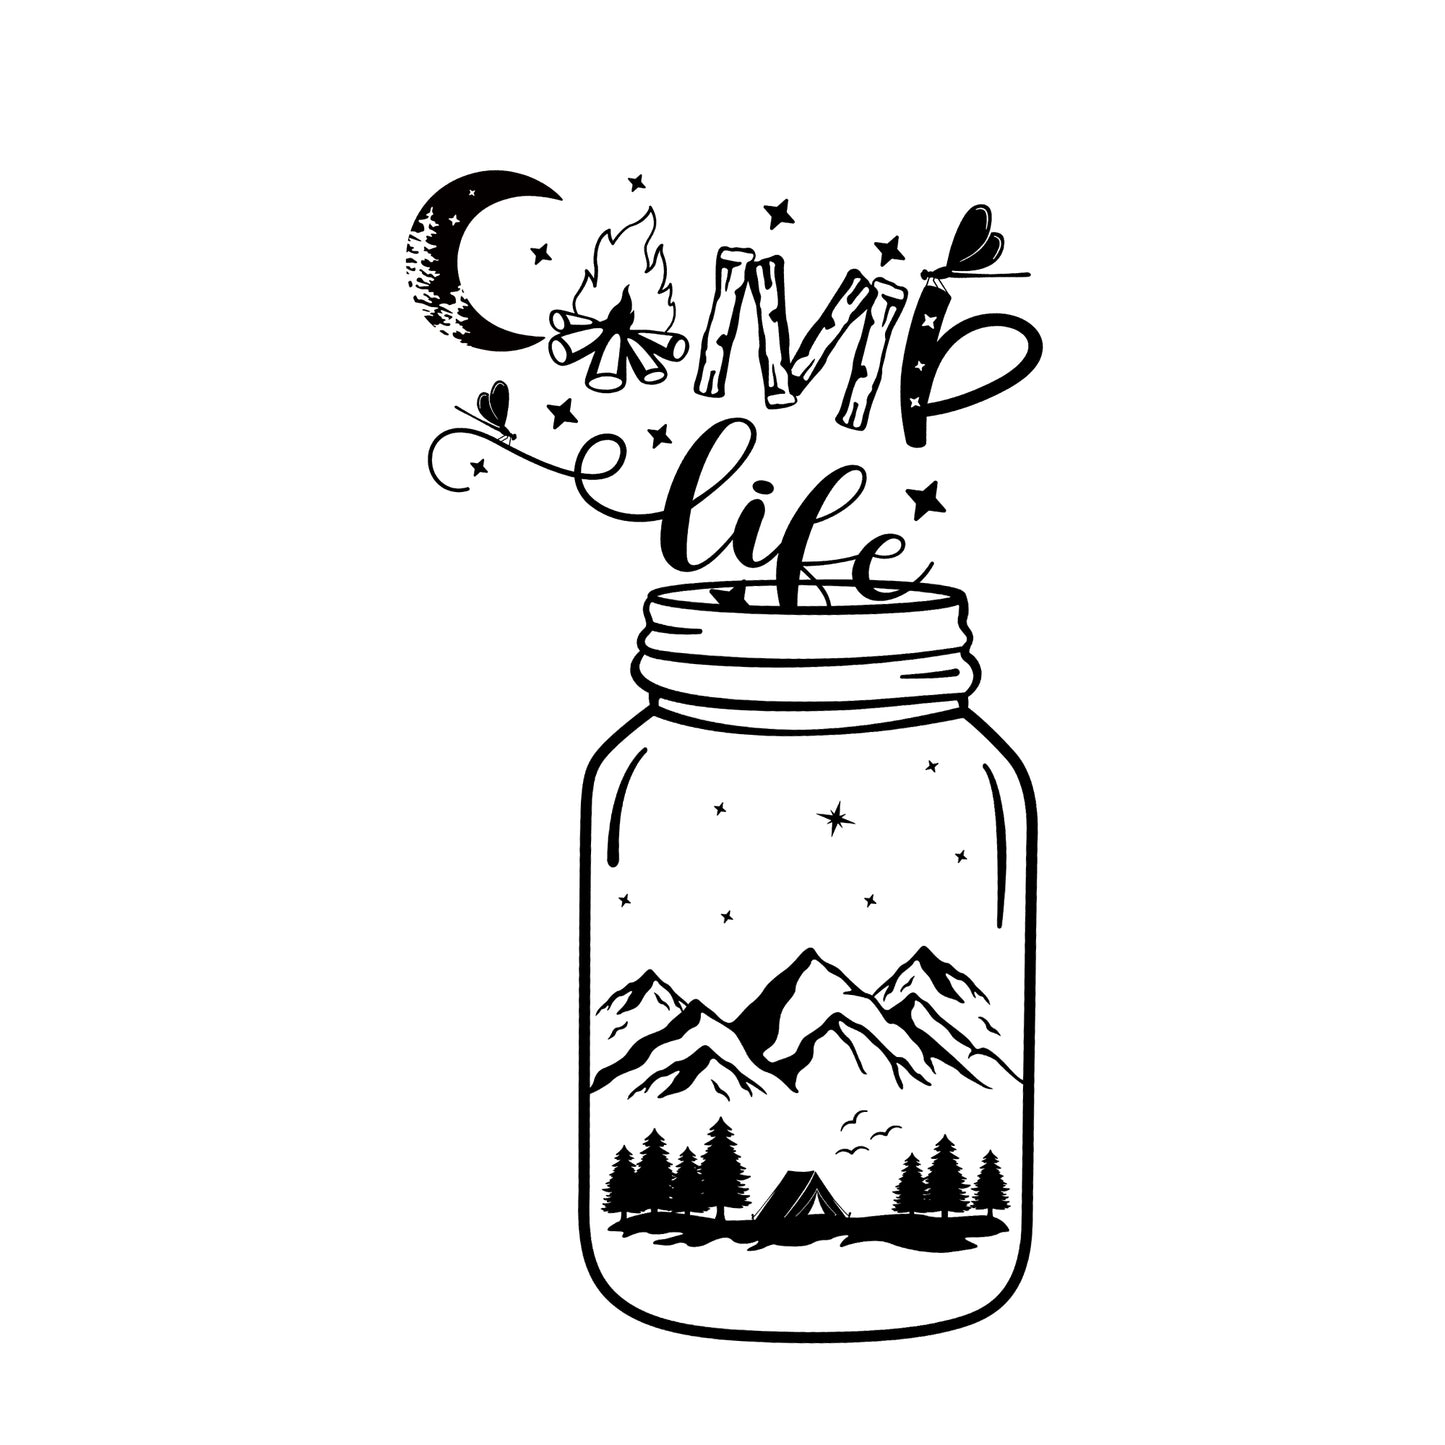 "CAMP life" personalisiert  Emailletasse